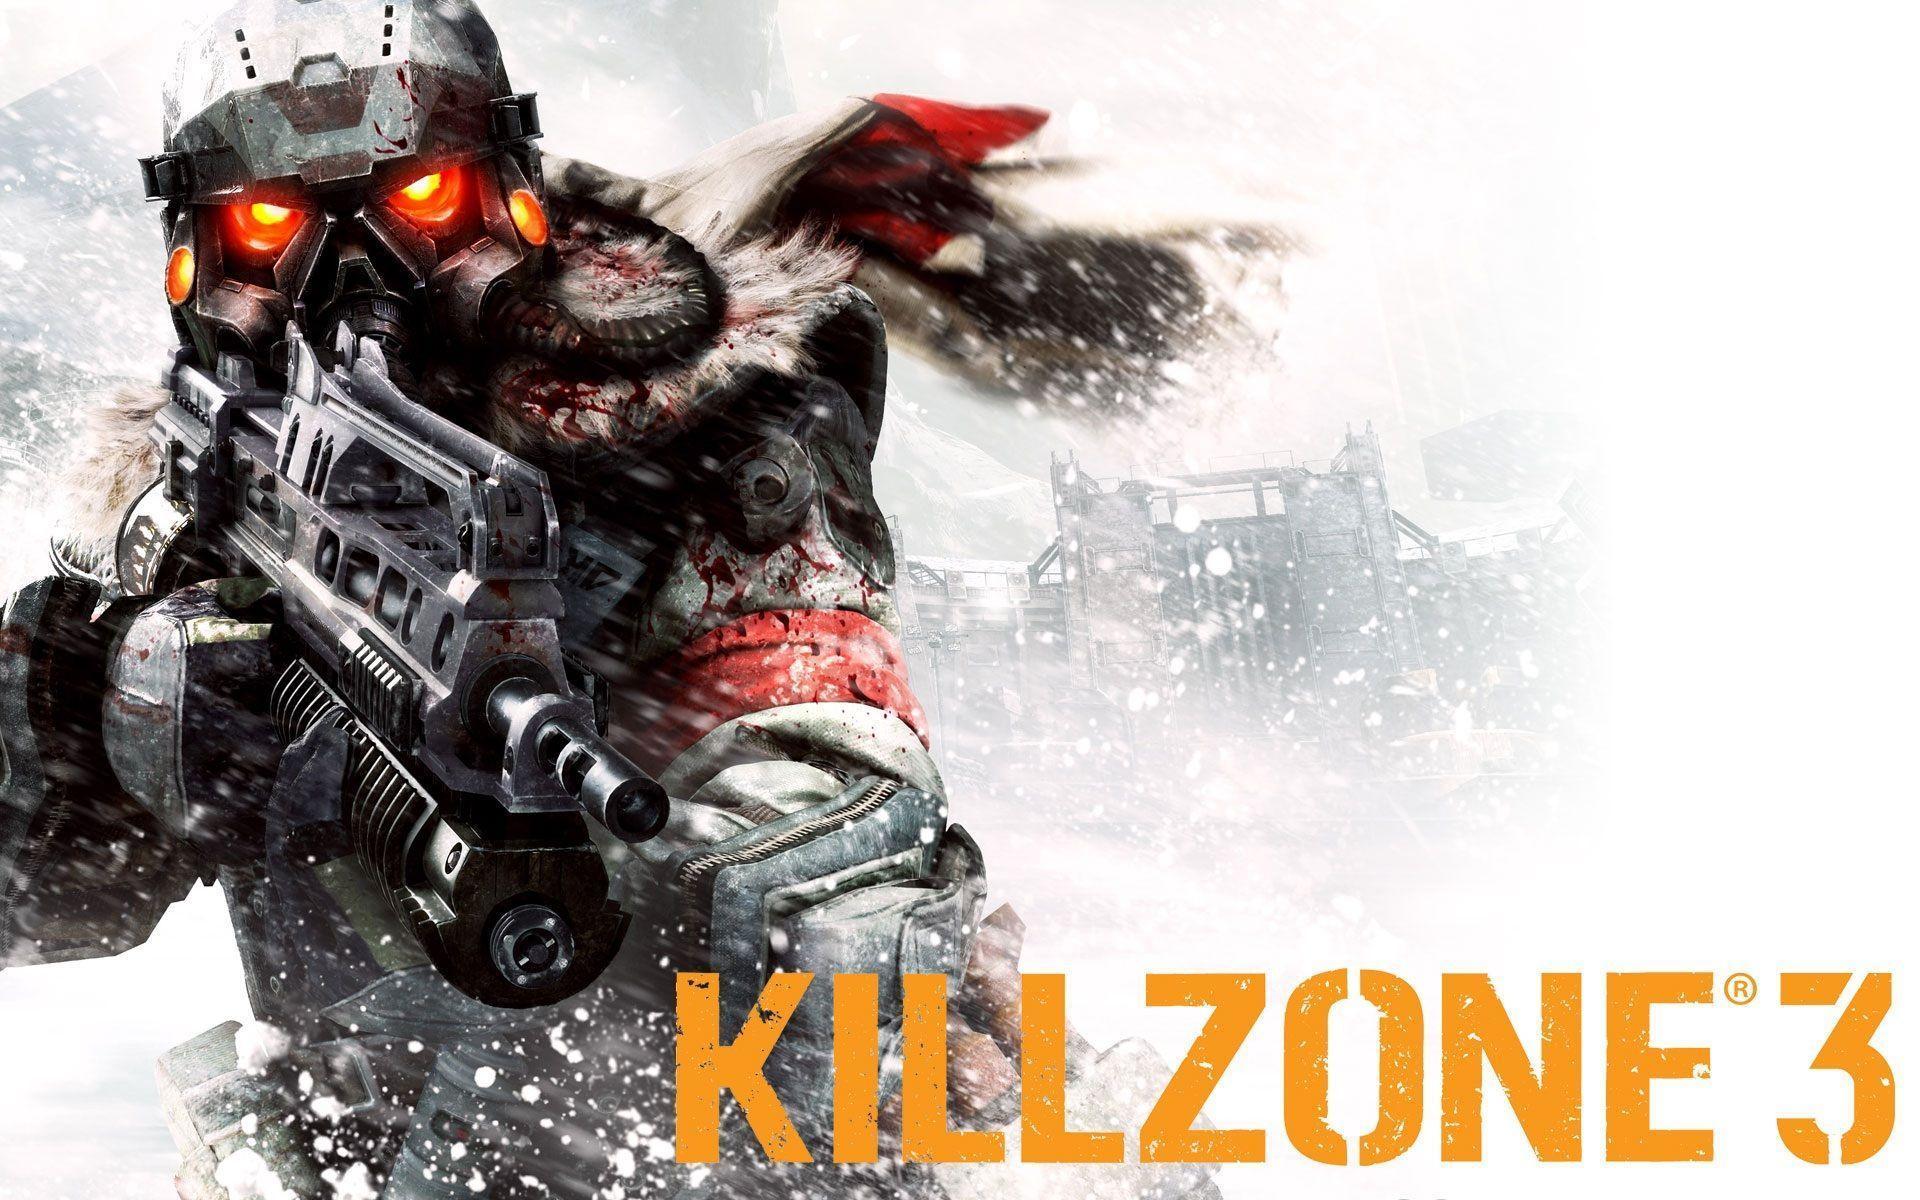 Killzone 3 Wallpaper. High Quality Wallpaper